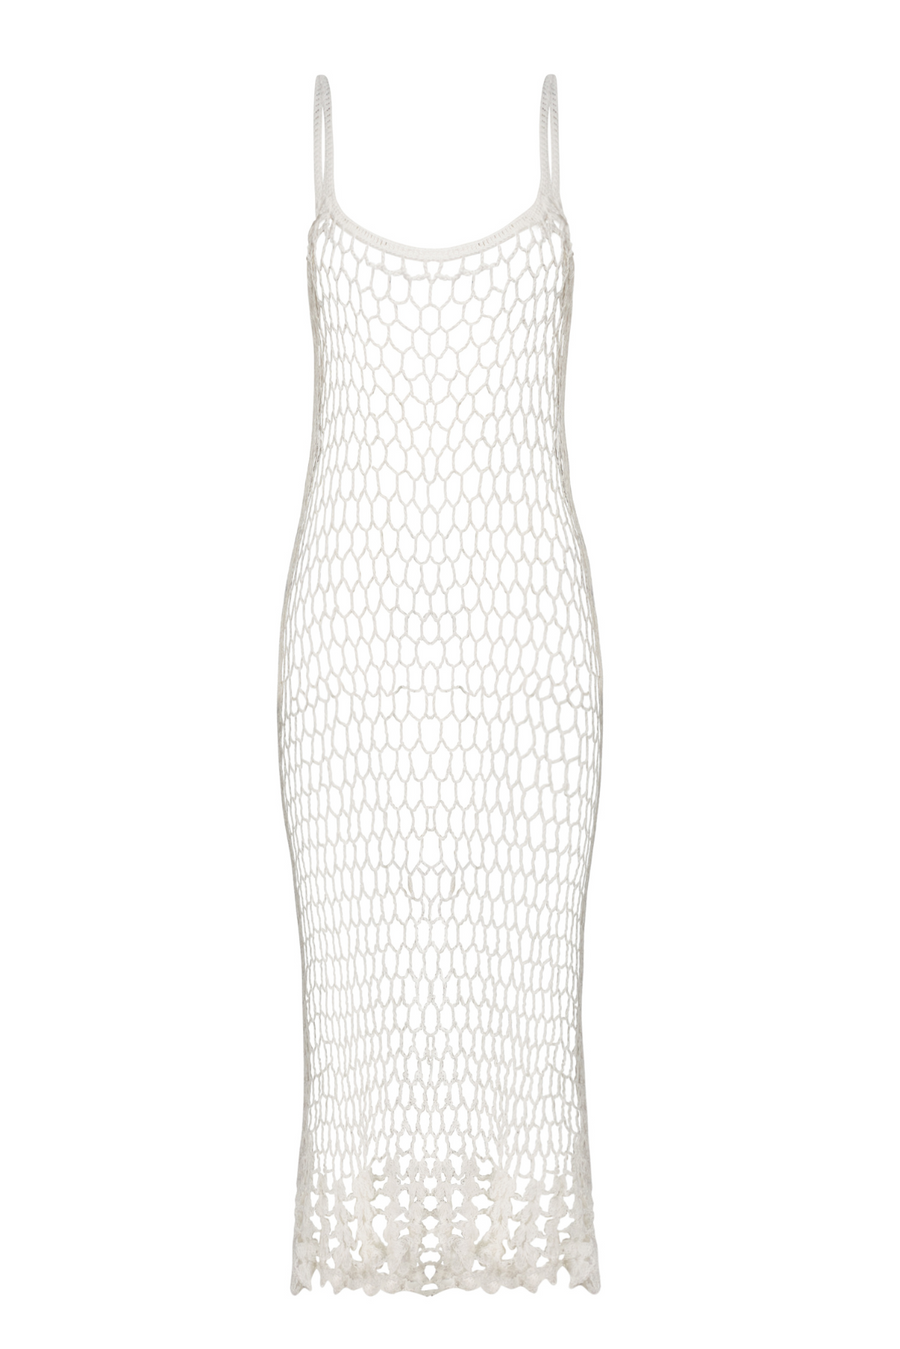 Marley Mesh Handmade Crochet Knit Dress - Stone white